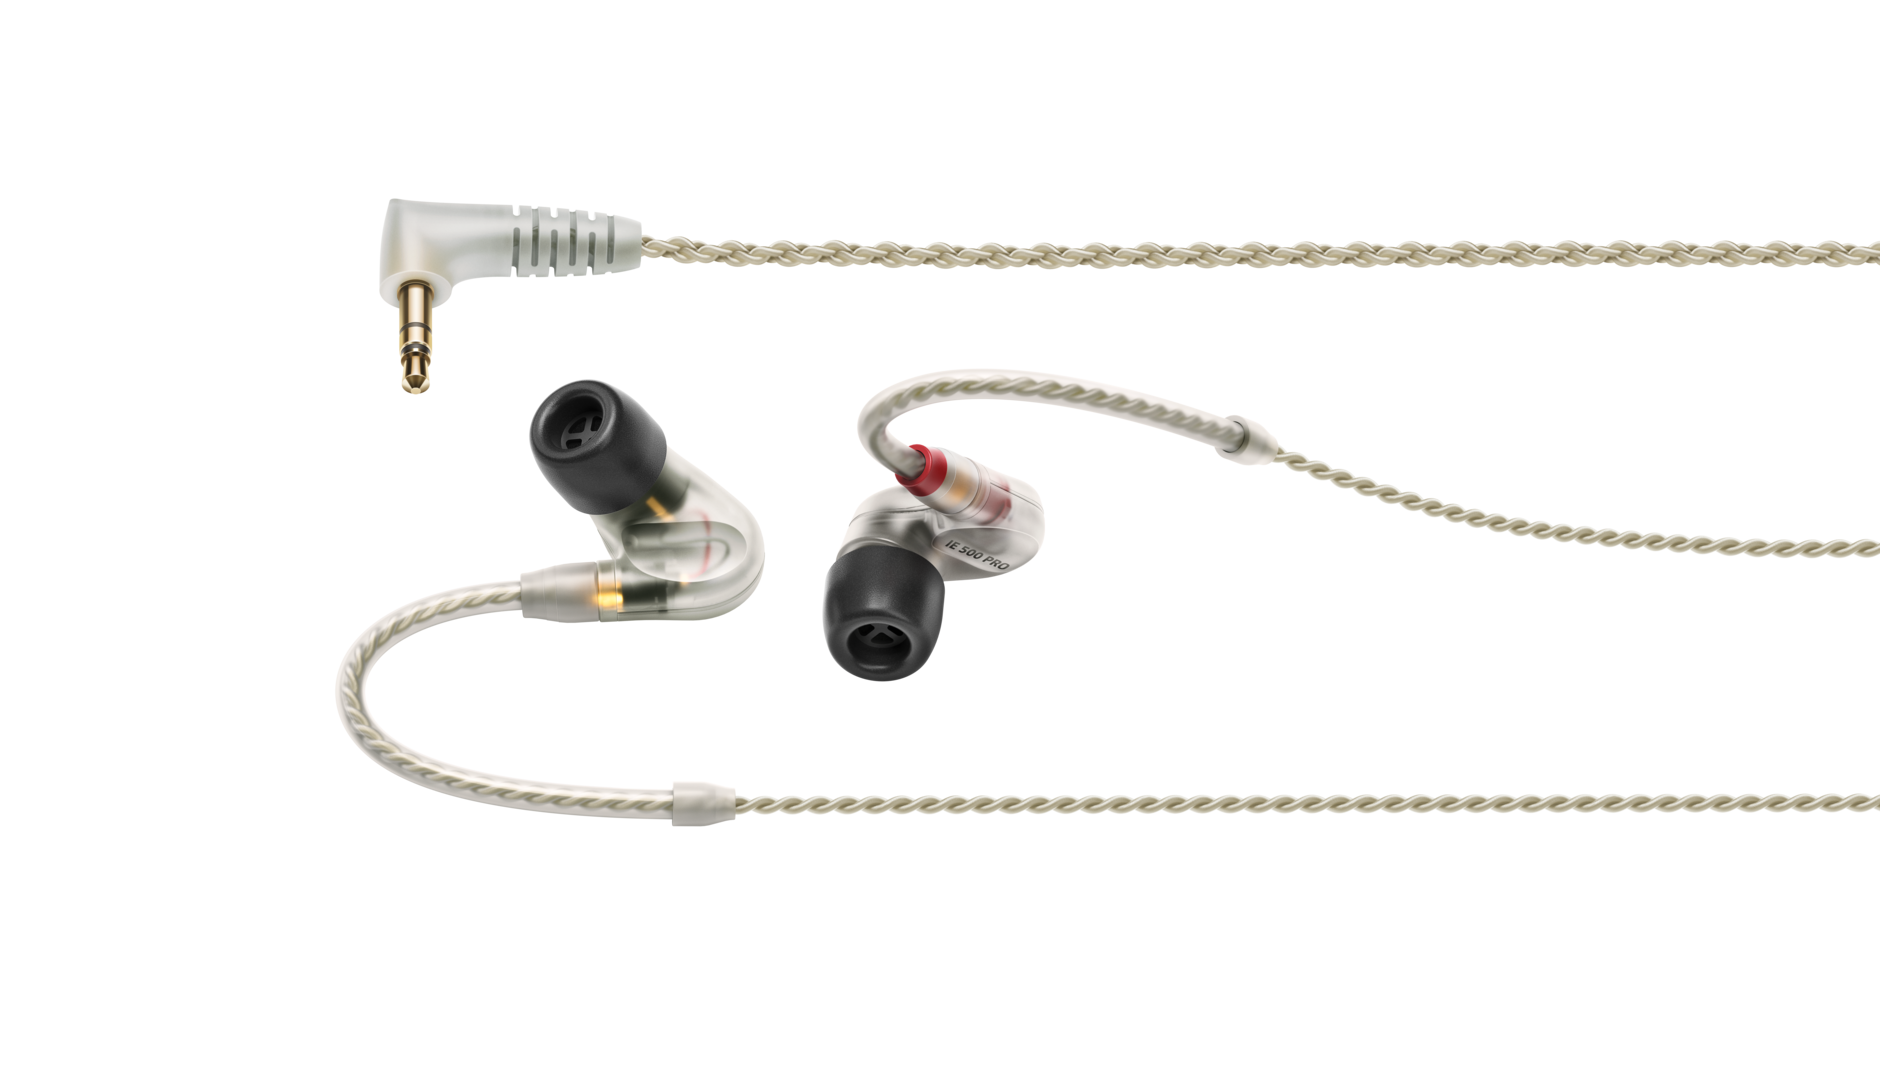 In-ear monitoring IE 500 Pro | Sennheiser